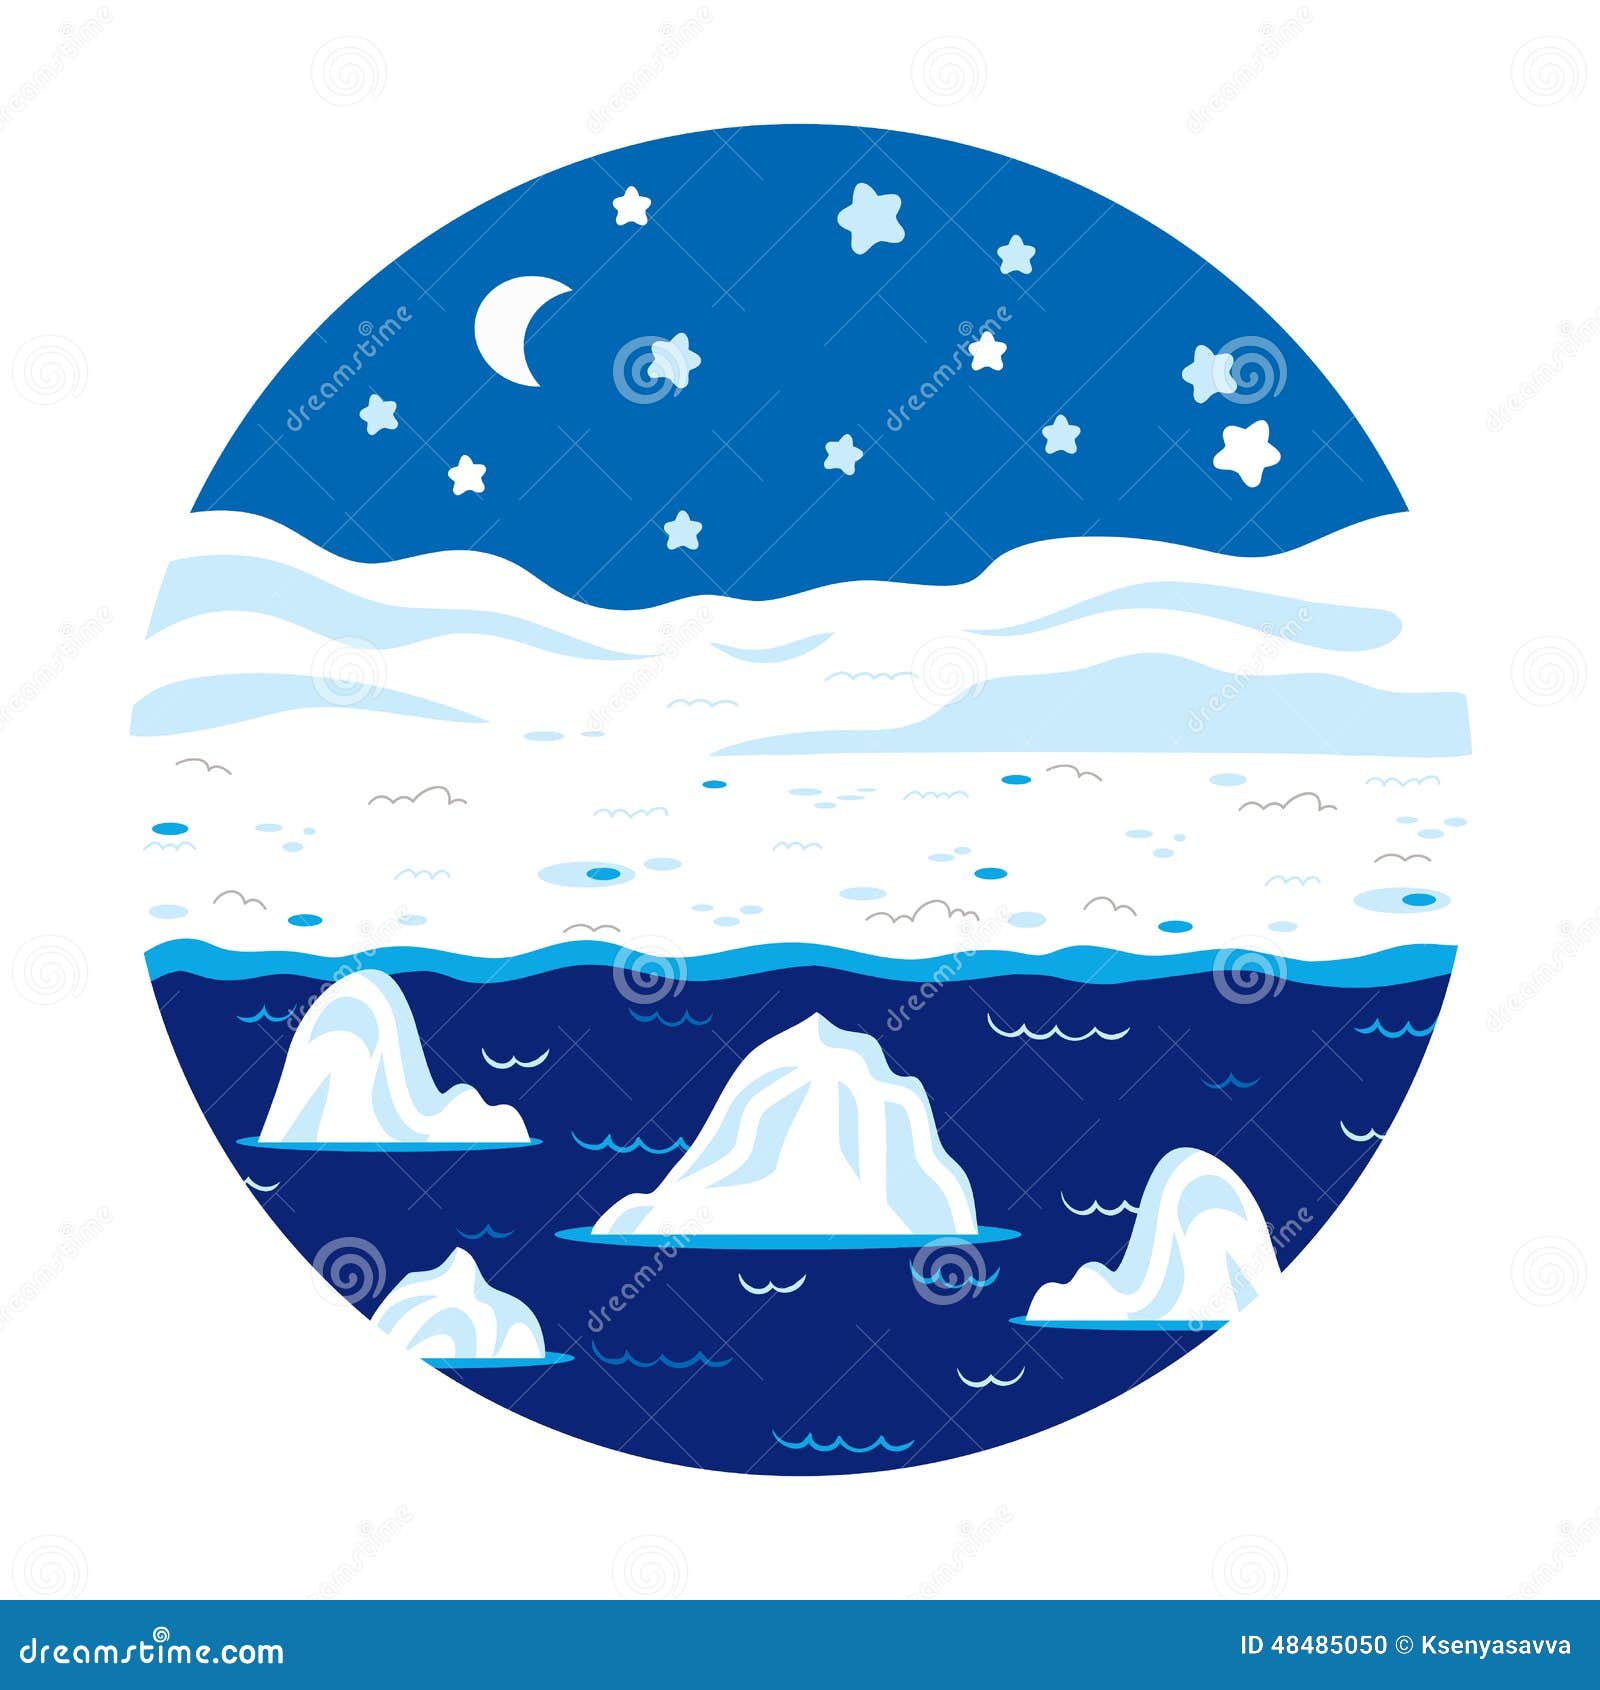 circle locations, little landscape (winter polar night)